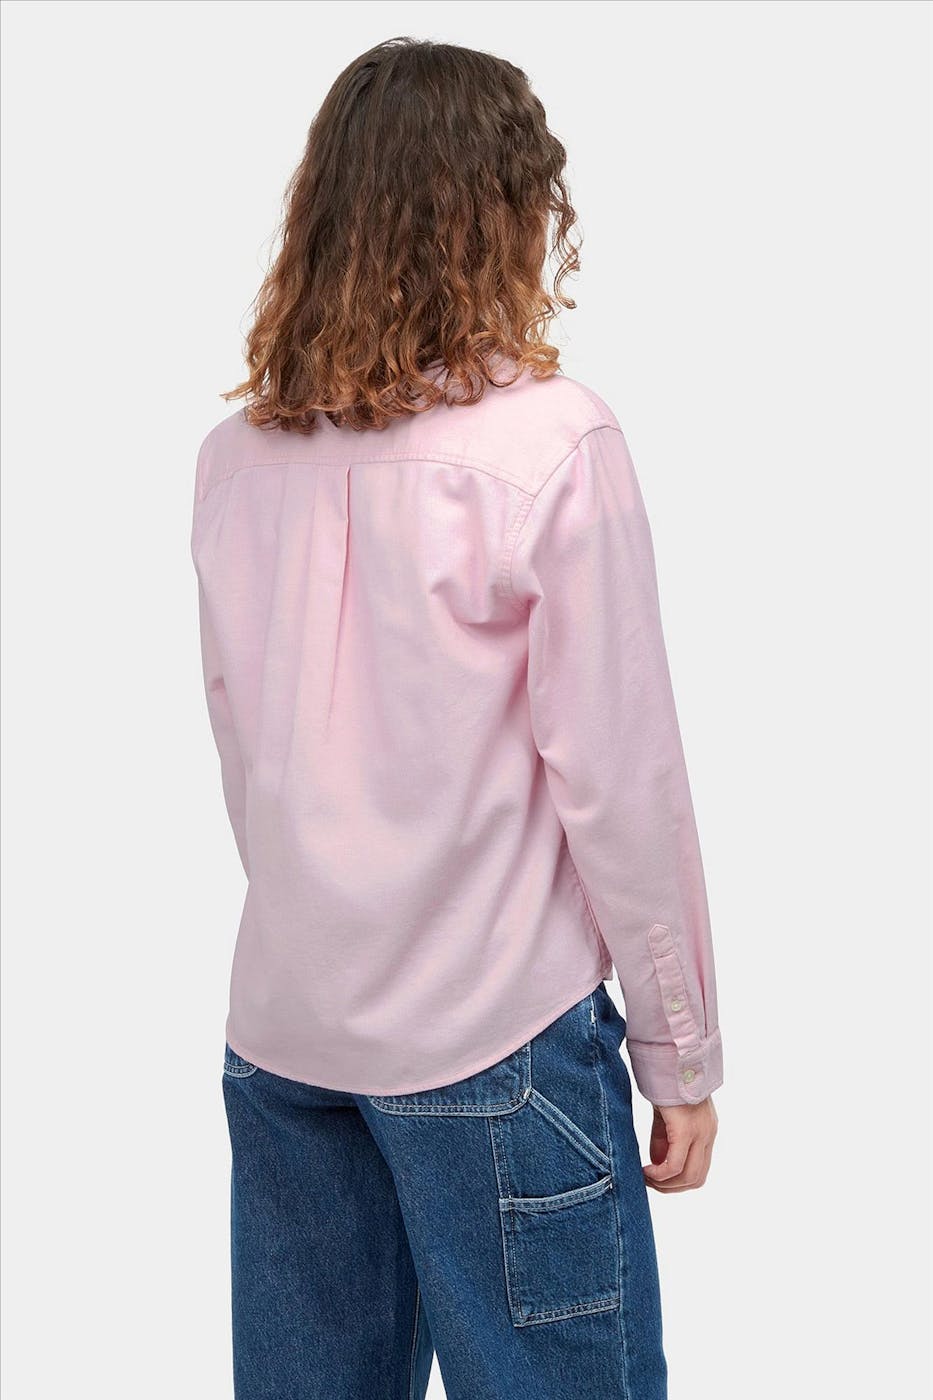 Carhartt WIP - Roze Madison Fine Cord hemd